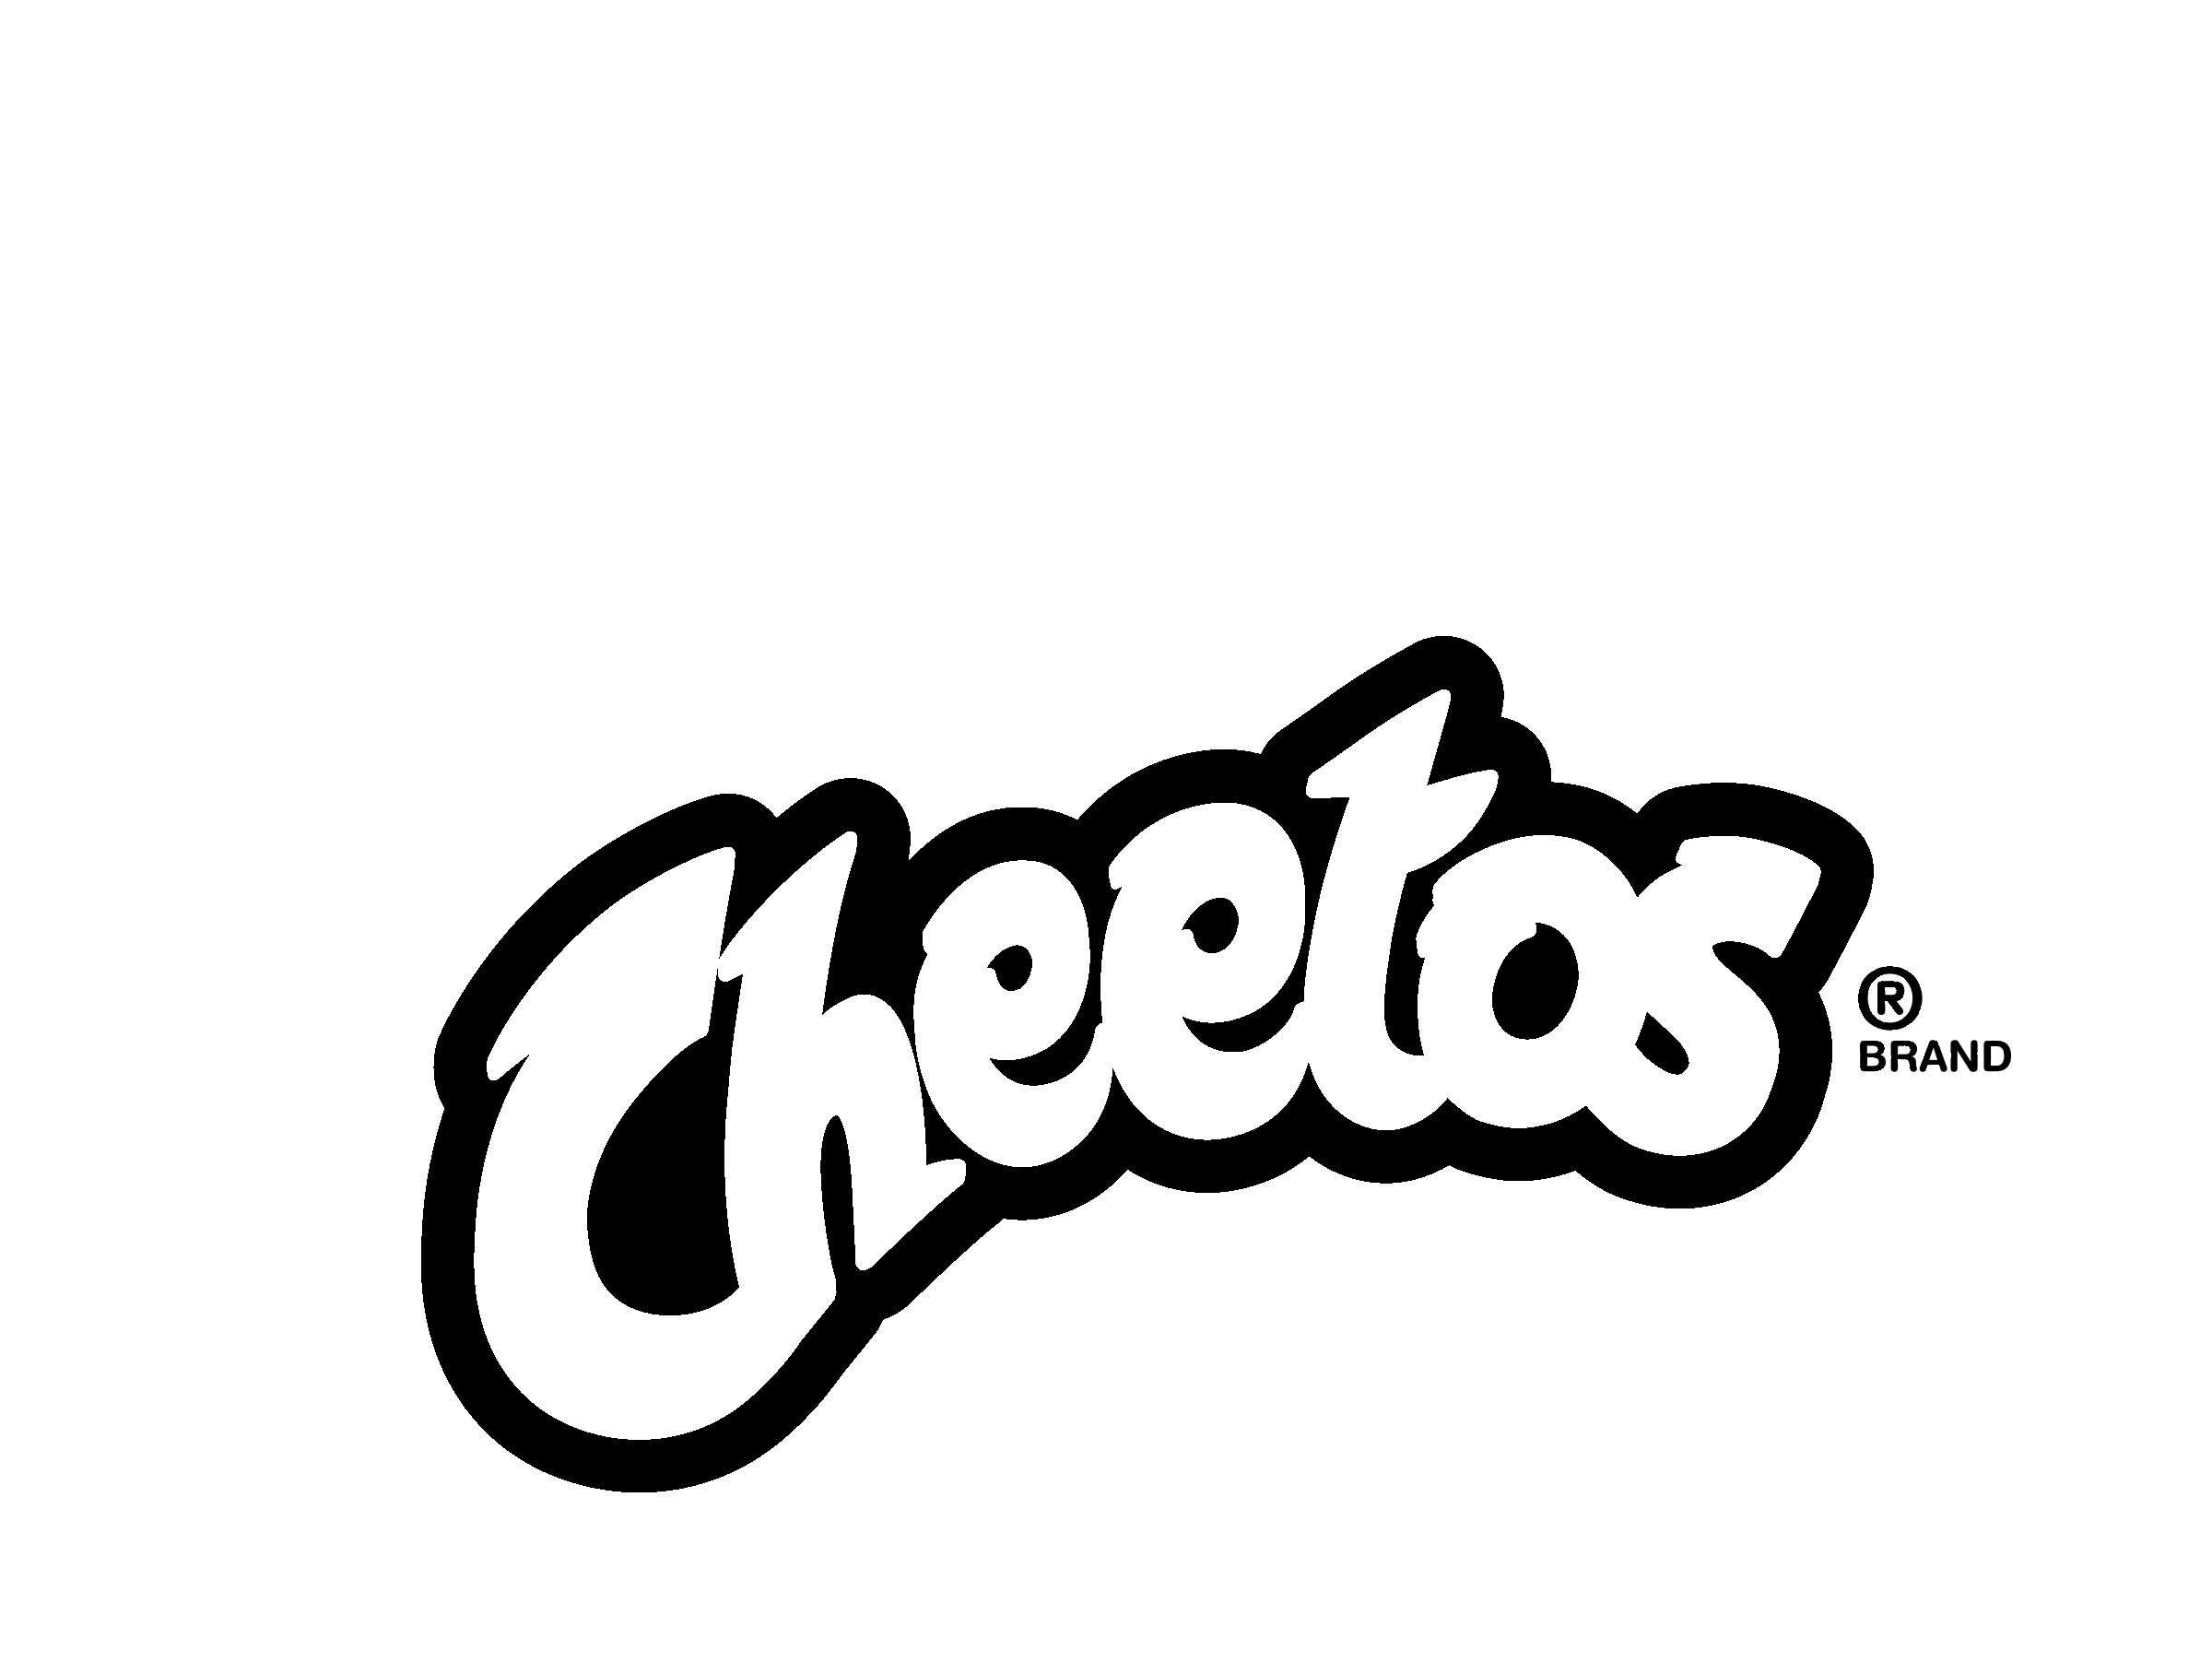 Cheetos Logo - BAKED CHEETOS Logo PNG Transparent & SVG Vector - Freebie Supply